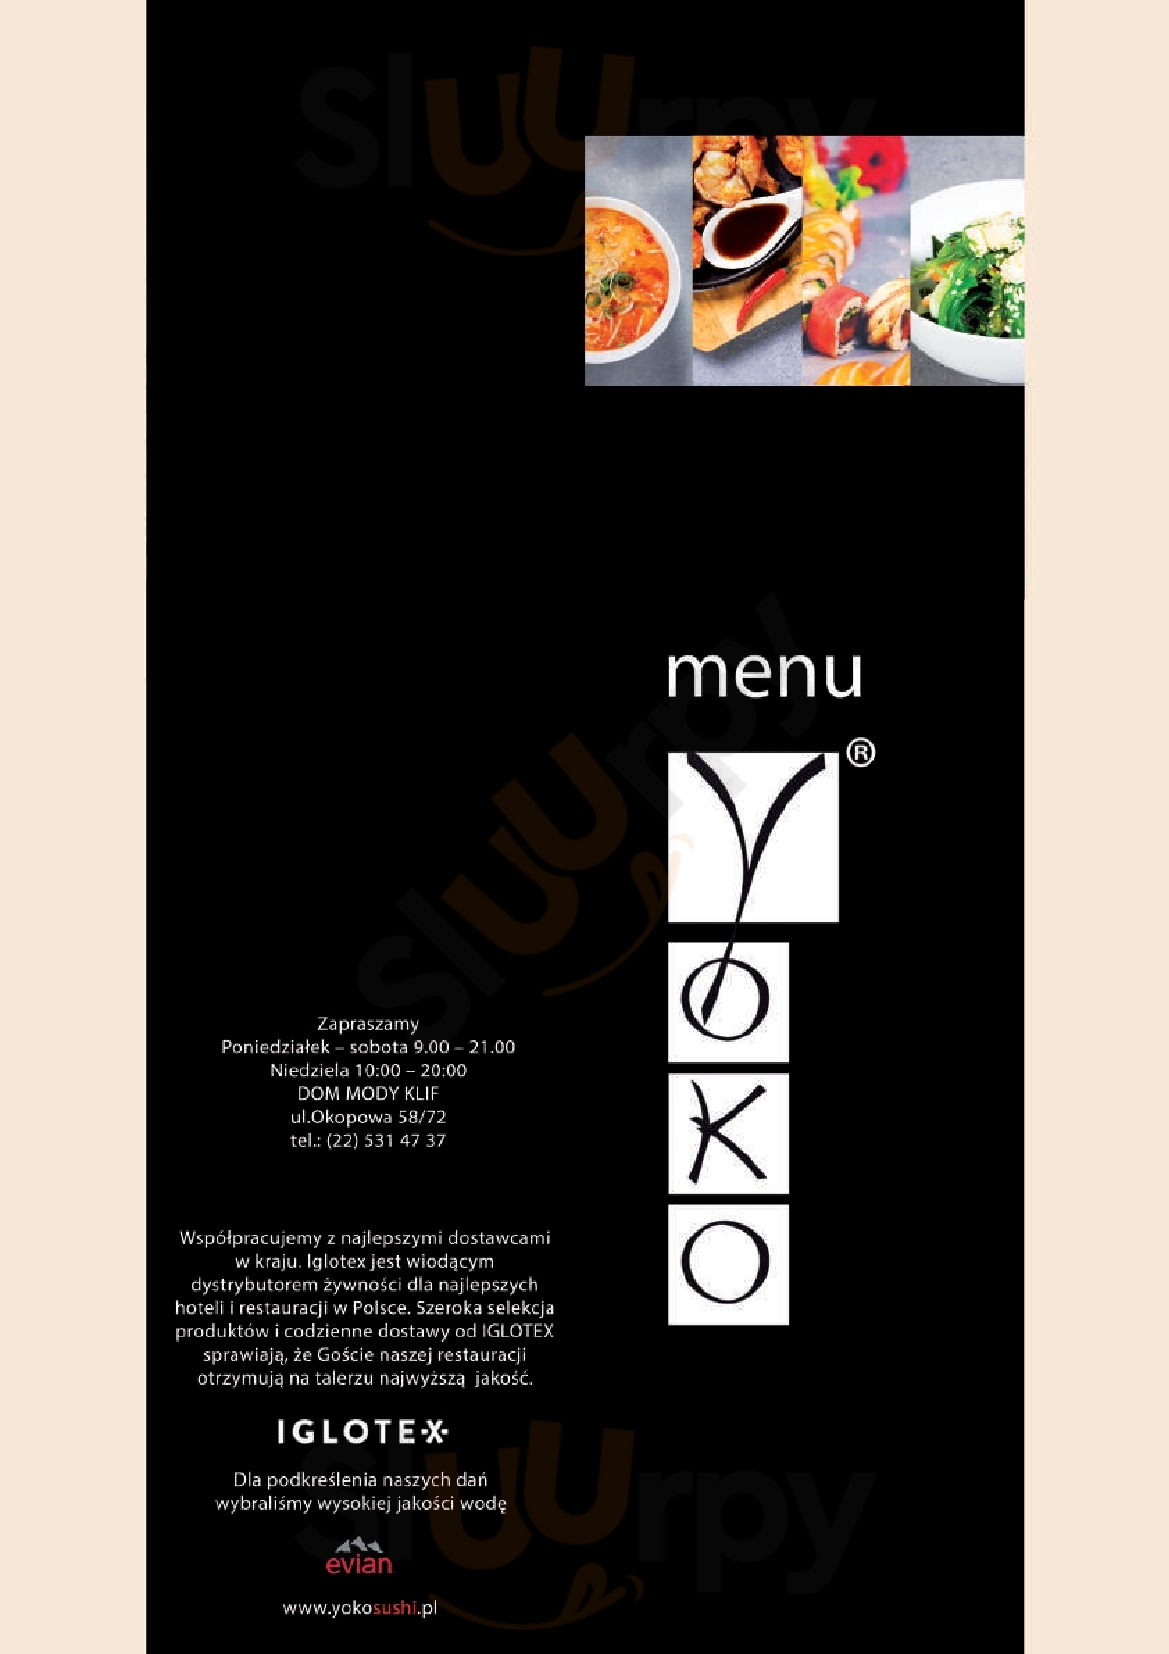 Yoko Restaurant Warszawa Menu - 1